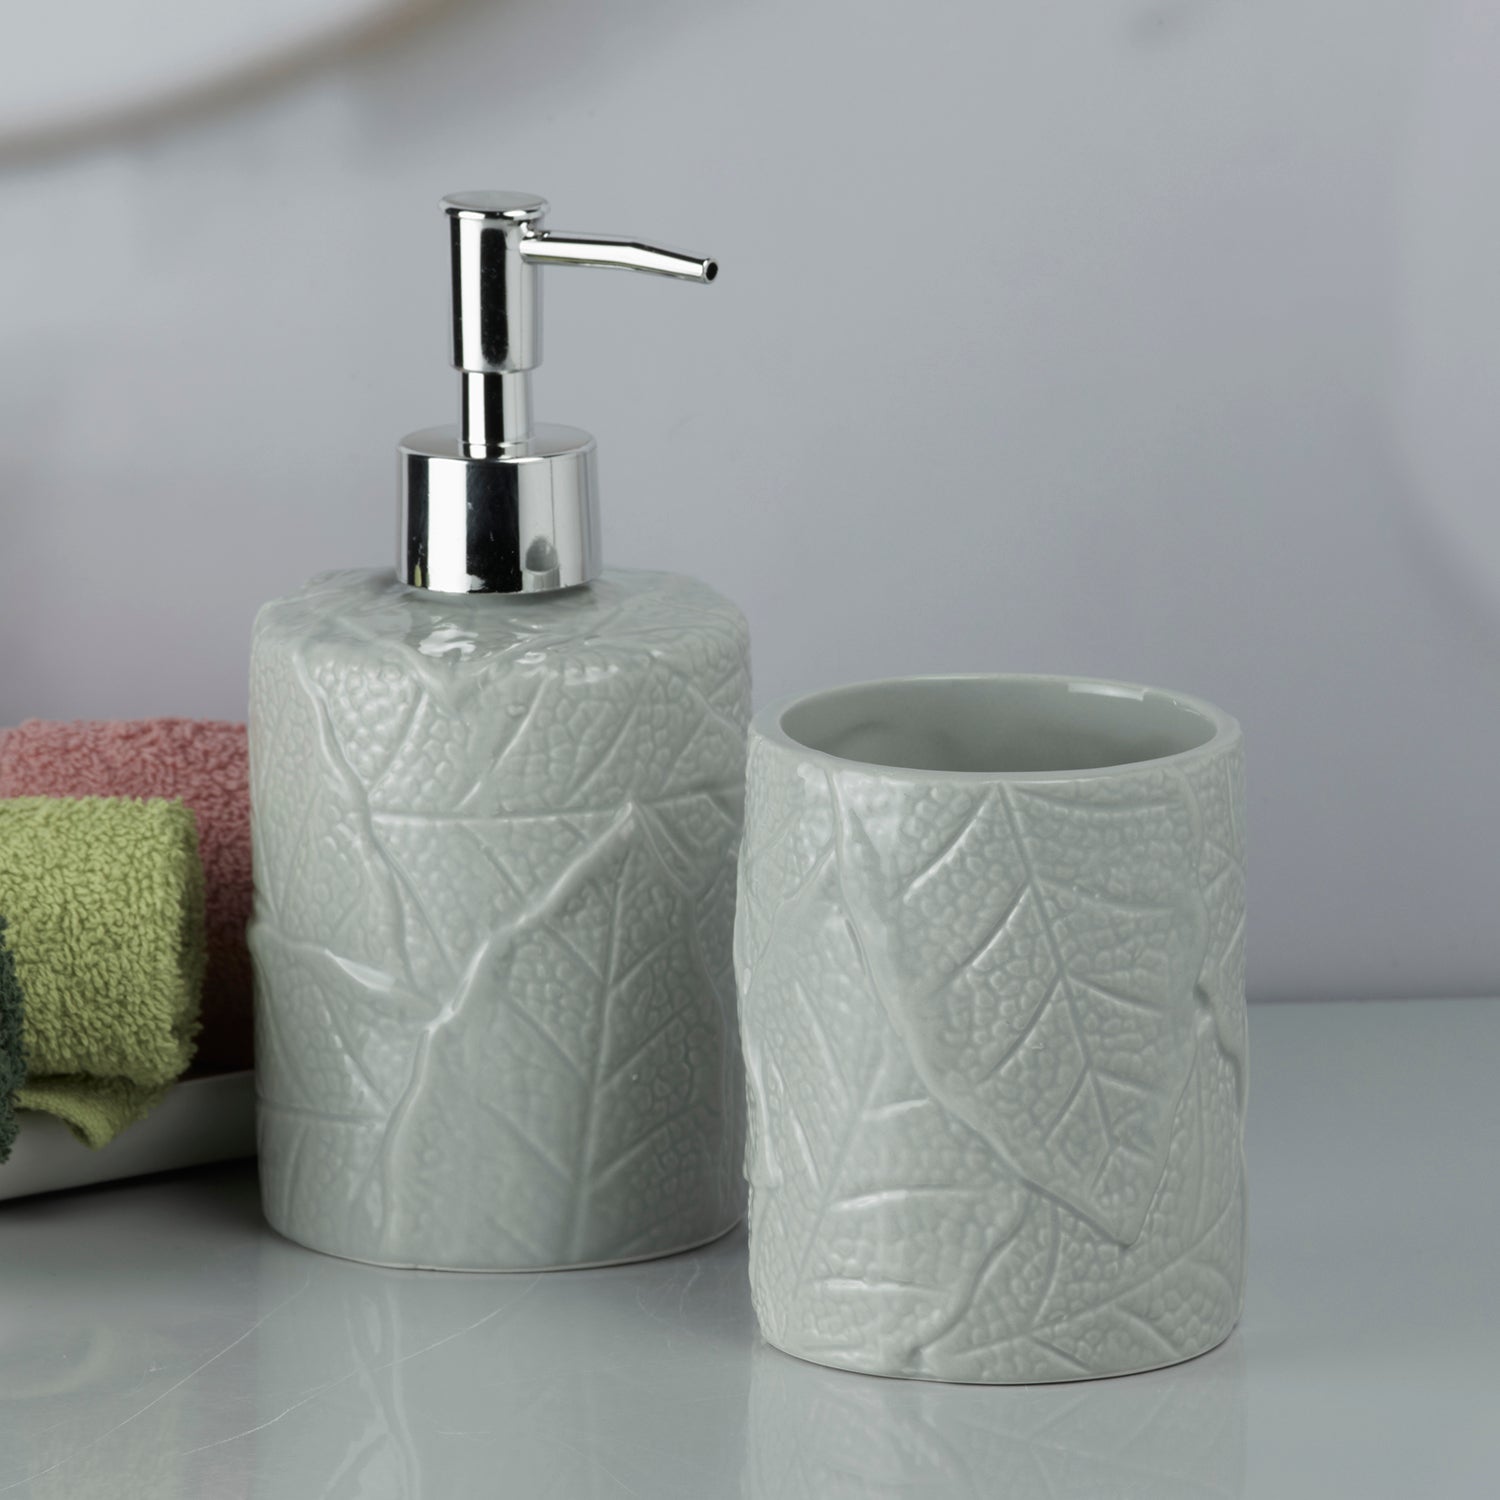 Ceramic Bathroom Accessories Set of 2 Bath Set with Soap Dispenser (9607)